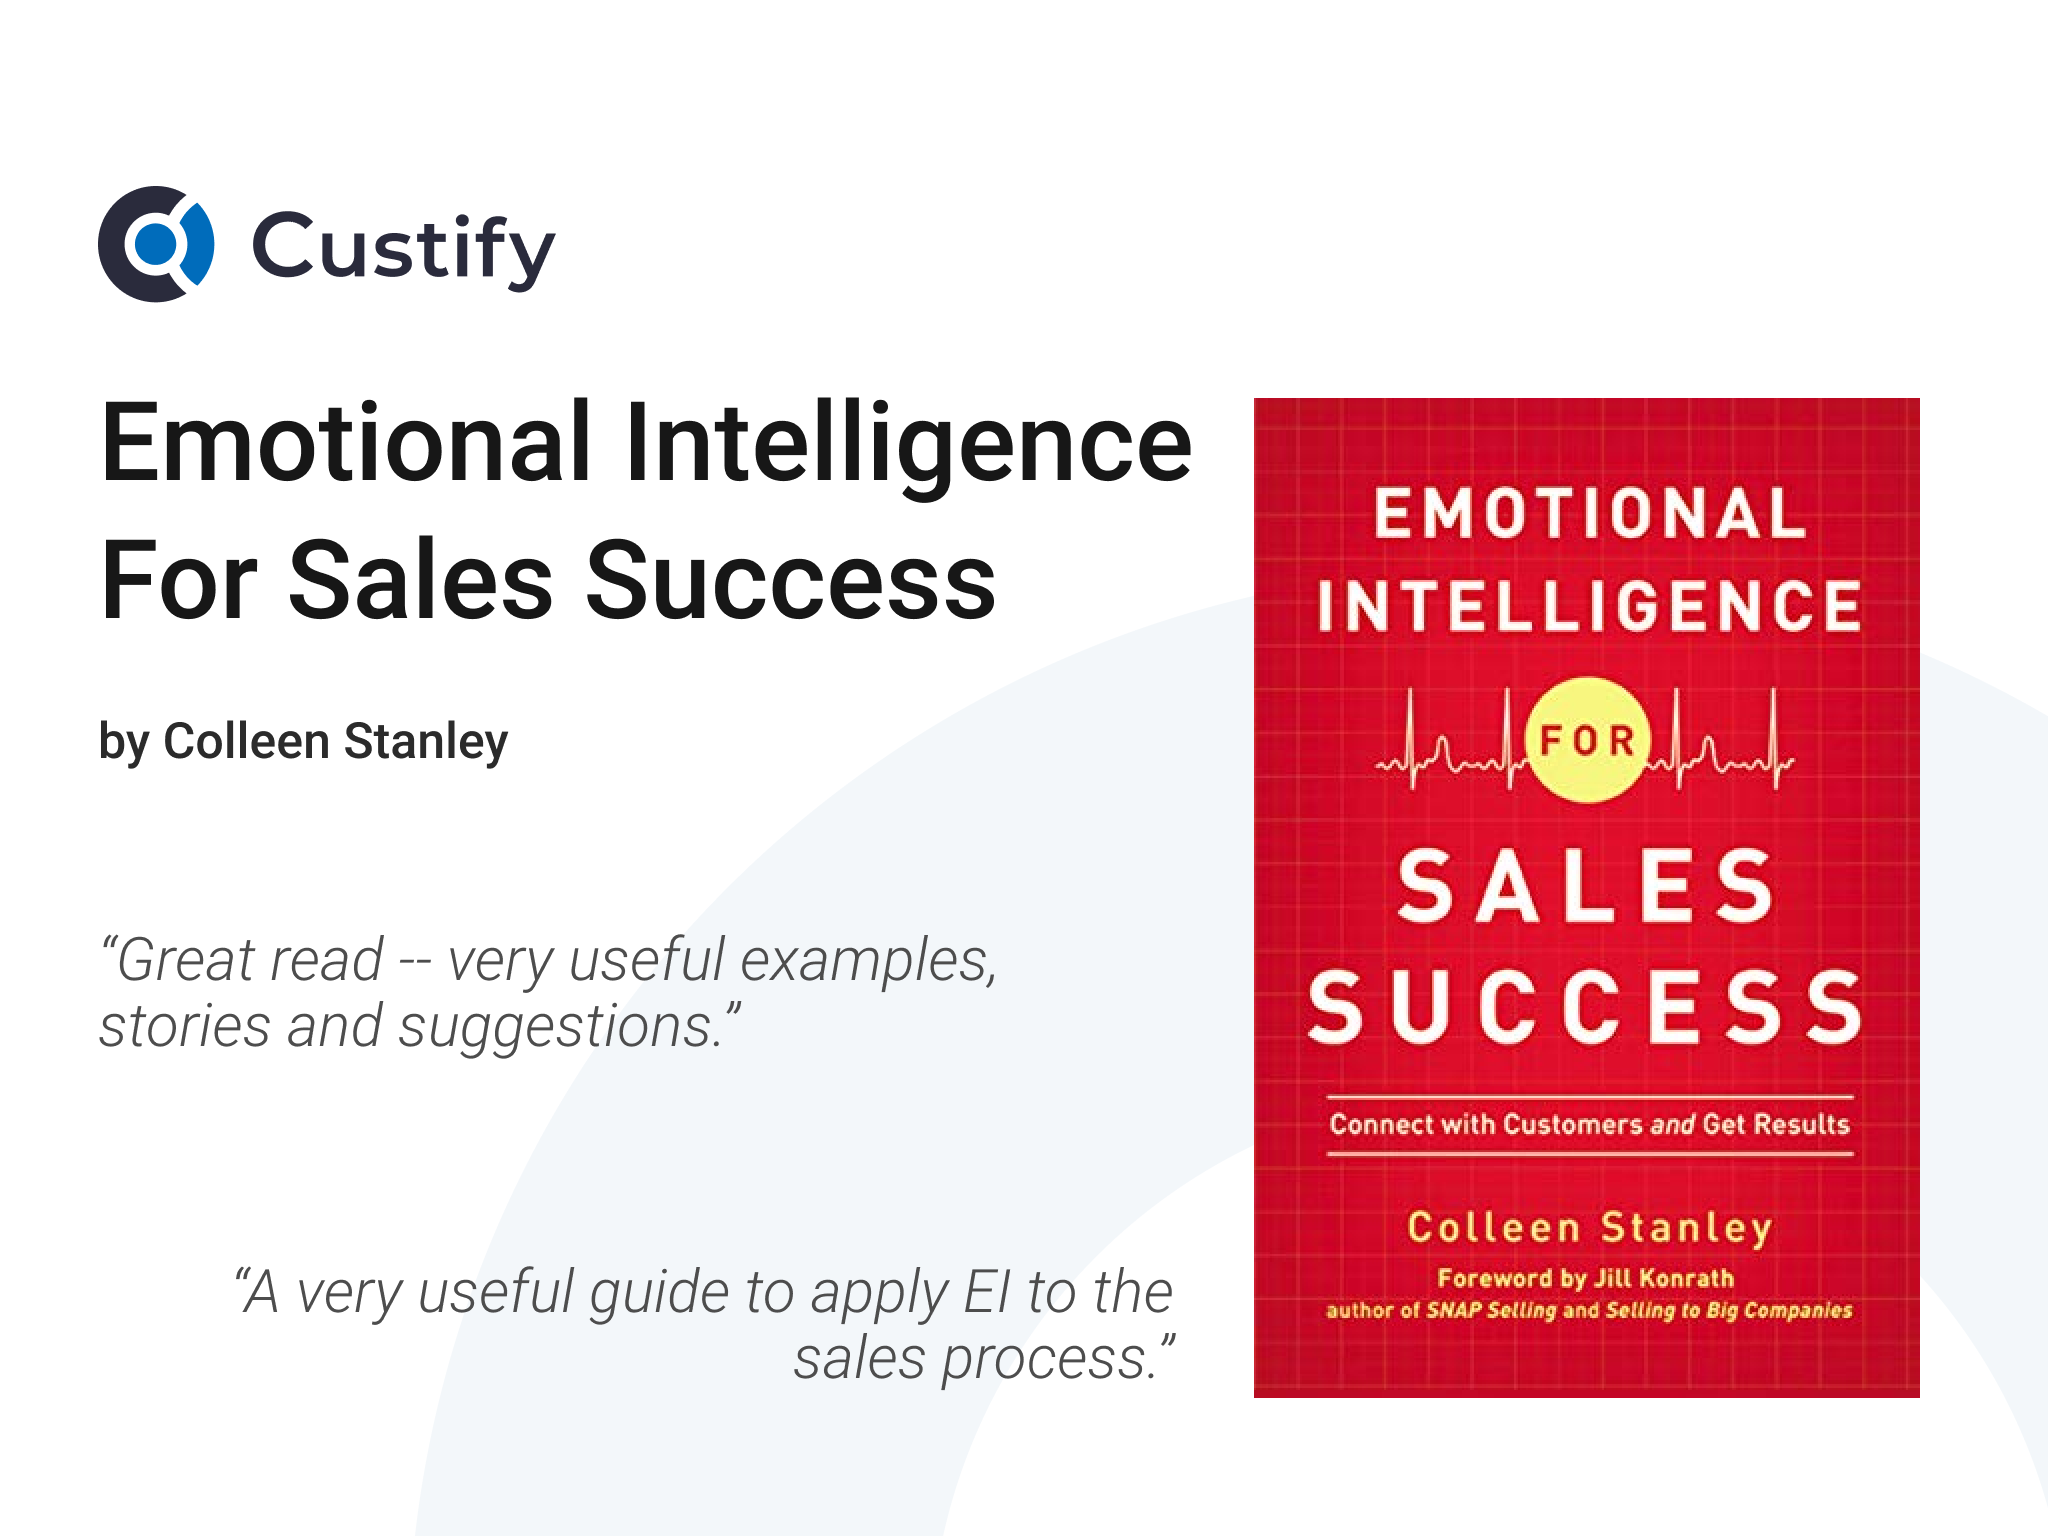 customer-success-book